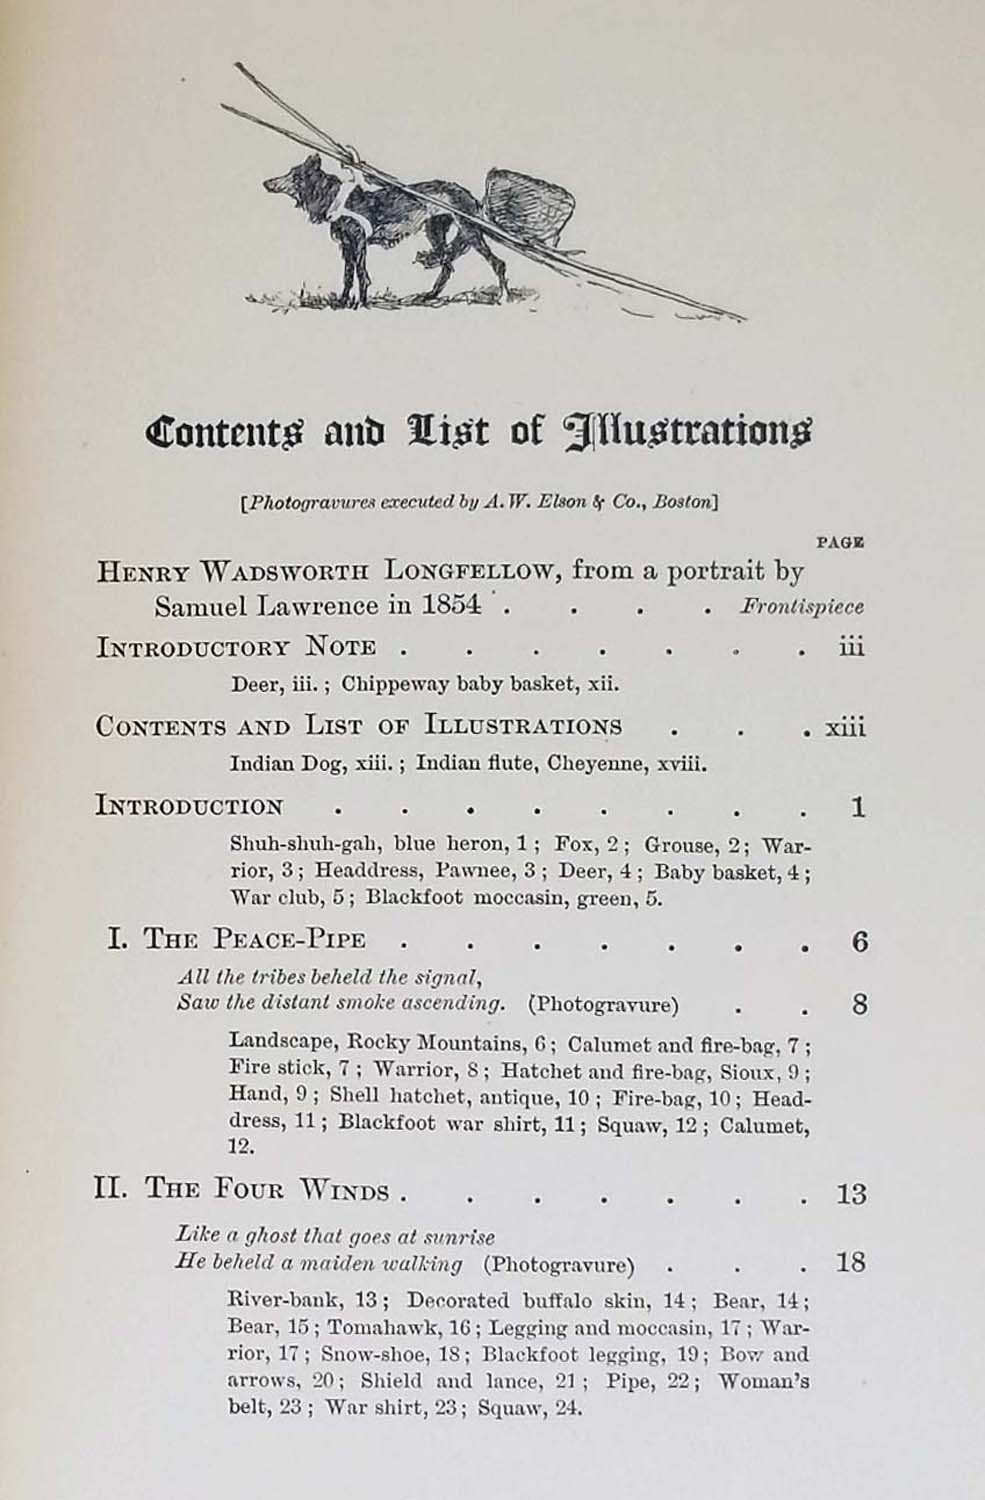 Song of Hiawatha - Henry Wadsworth Longfellow 1891 (Illus. Frederic Remington) | 1st Edition